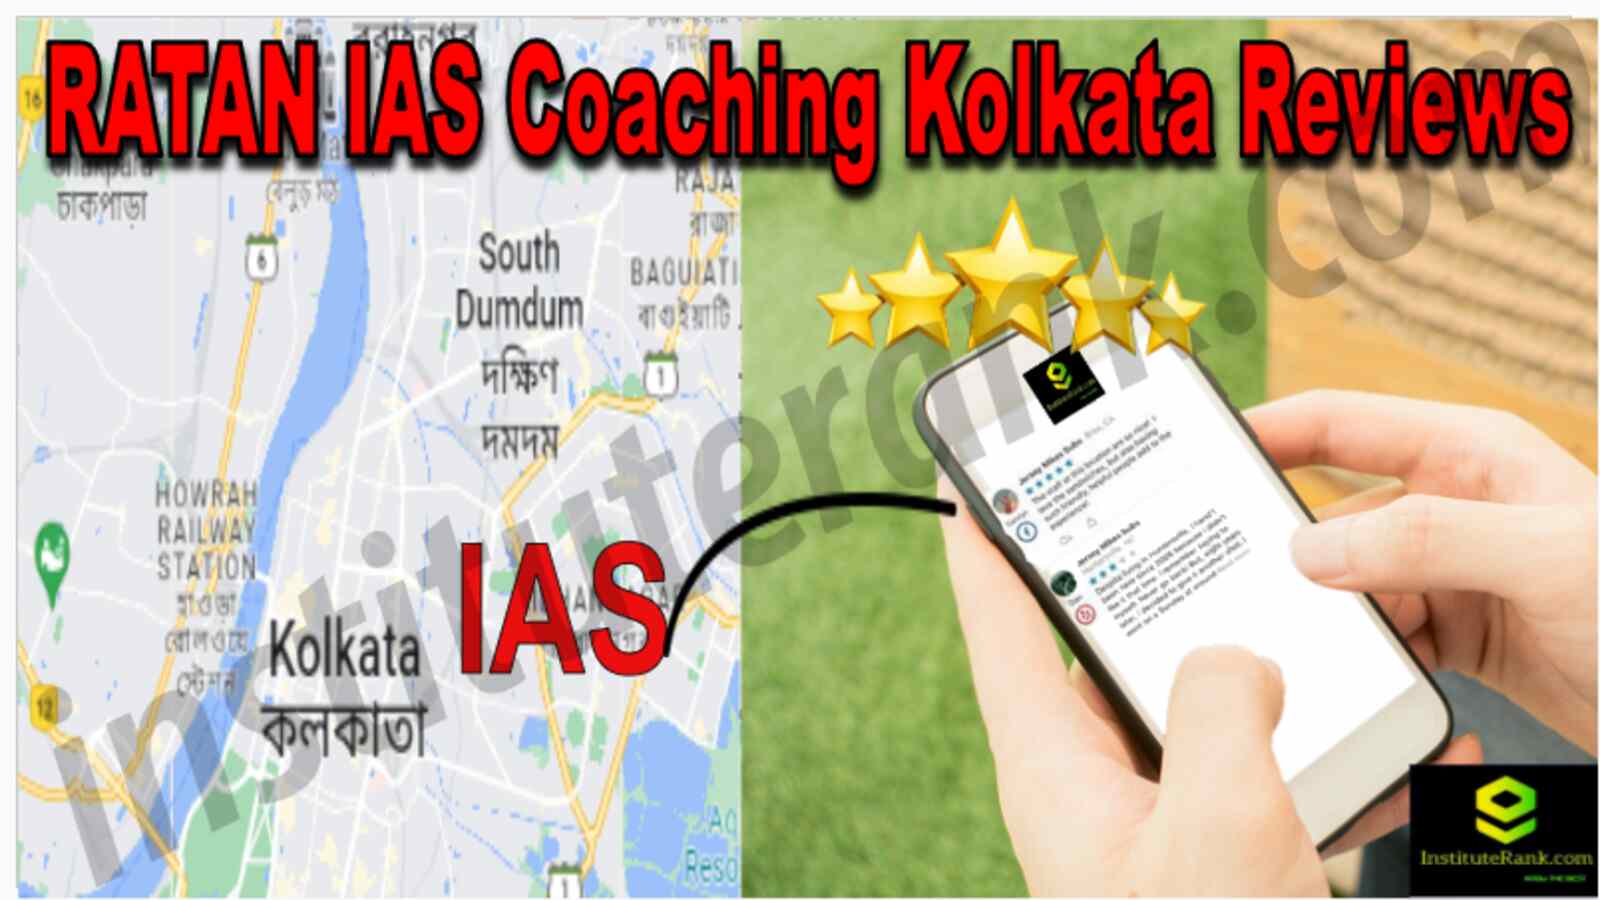 RATAN IAS Coaching Kolkata Reviews